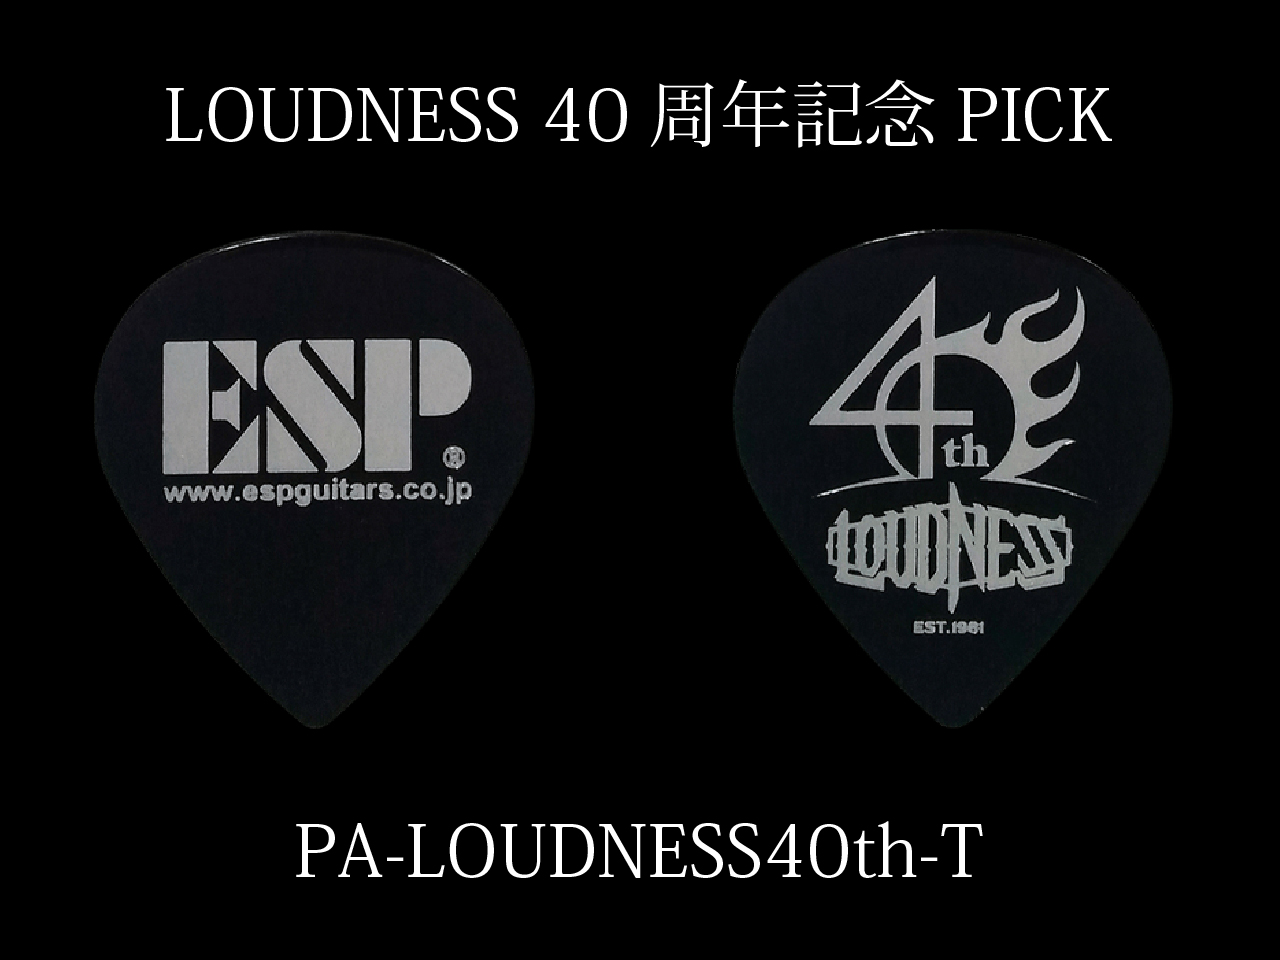 ESP(イーエスピー) Artist Pick Series PA-LOUDNESS40th-T (LOUDNESS 40周年記念)